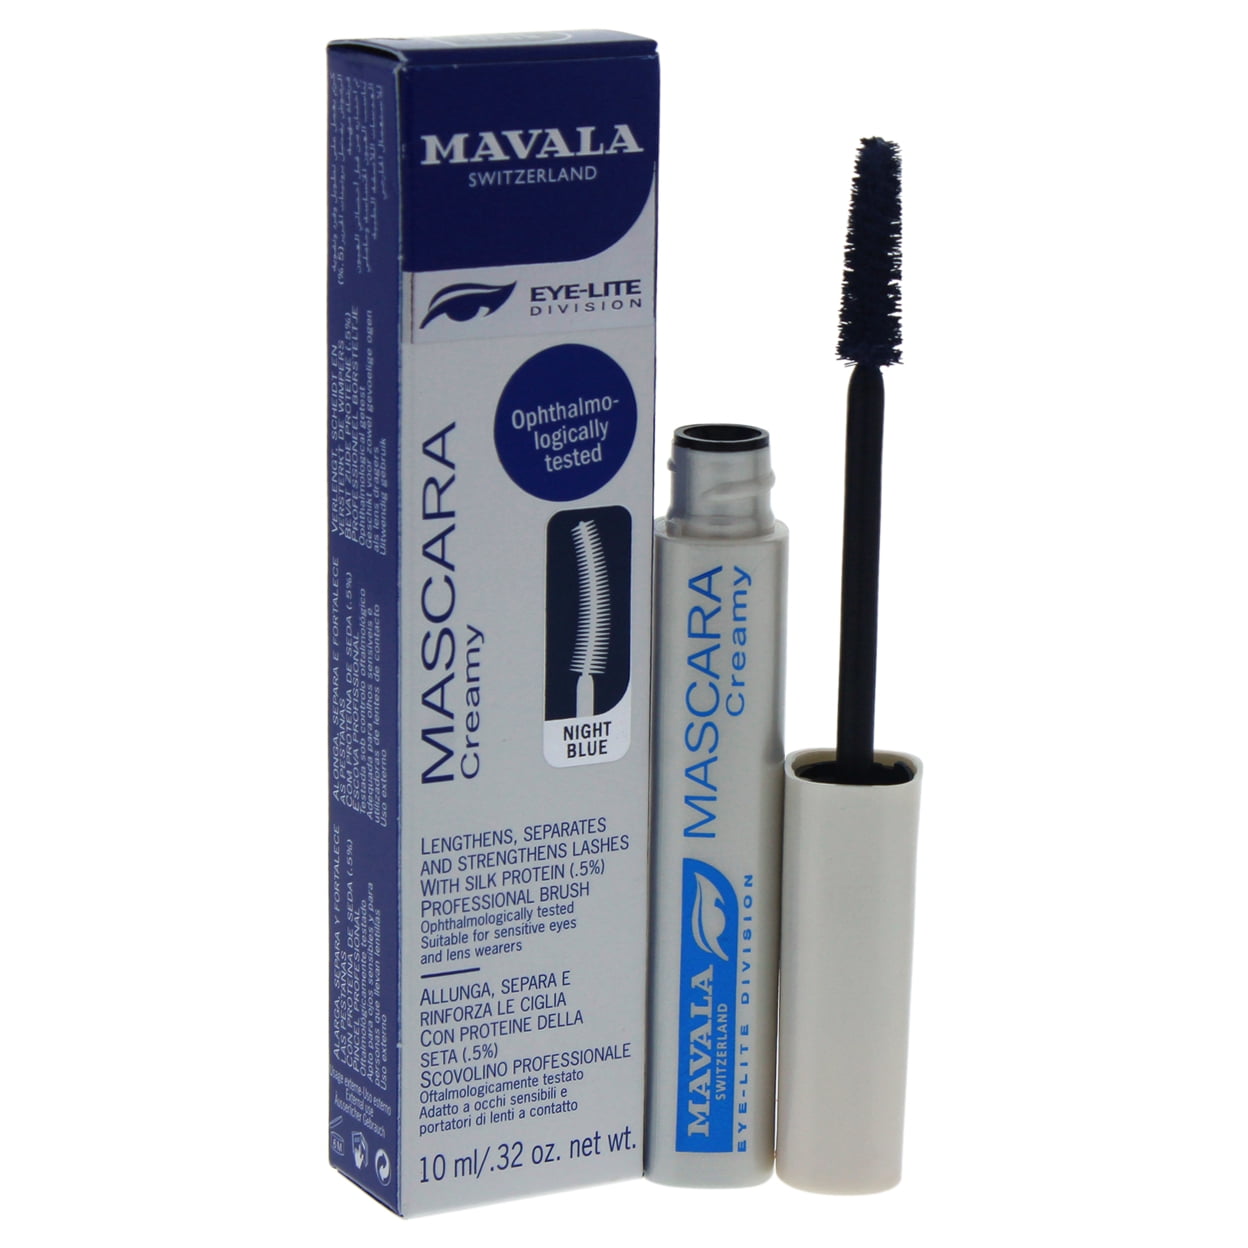 bøf Seaboard elektropositive Mascara Creamy - Night Blue by Mavala for Women - 0.32 oz Mascara -  Walmart.com